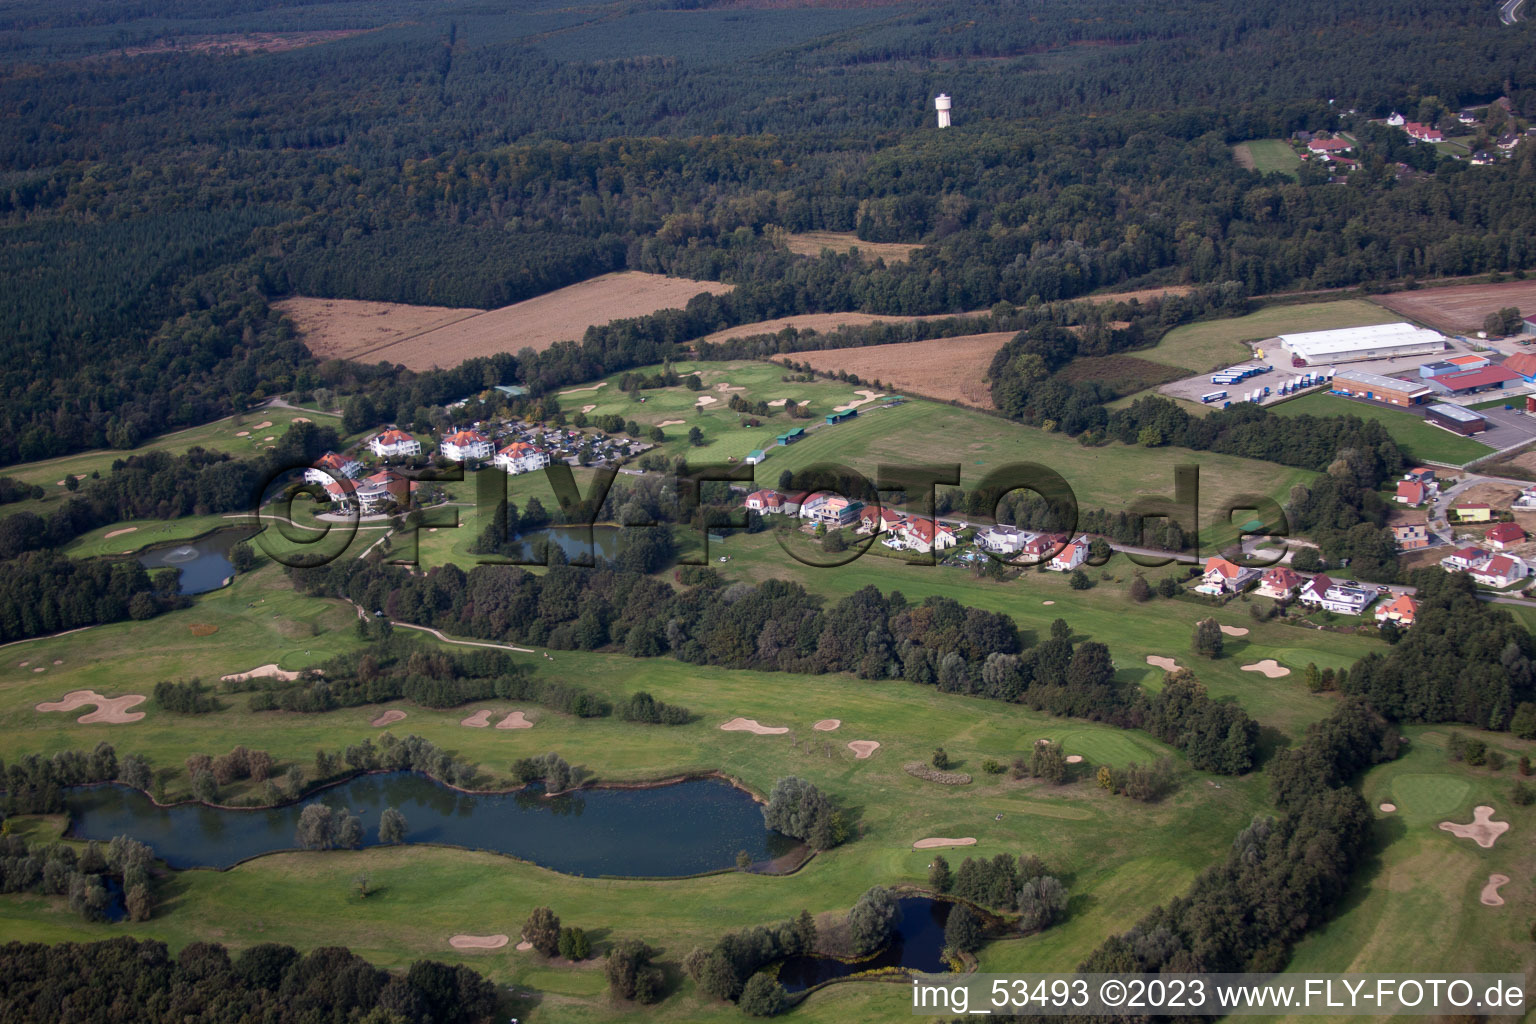 Baden-Baden Golf Club Soufflenheim in Soufflenheim in the state Bas-Rhin, France viewn from the air